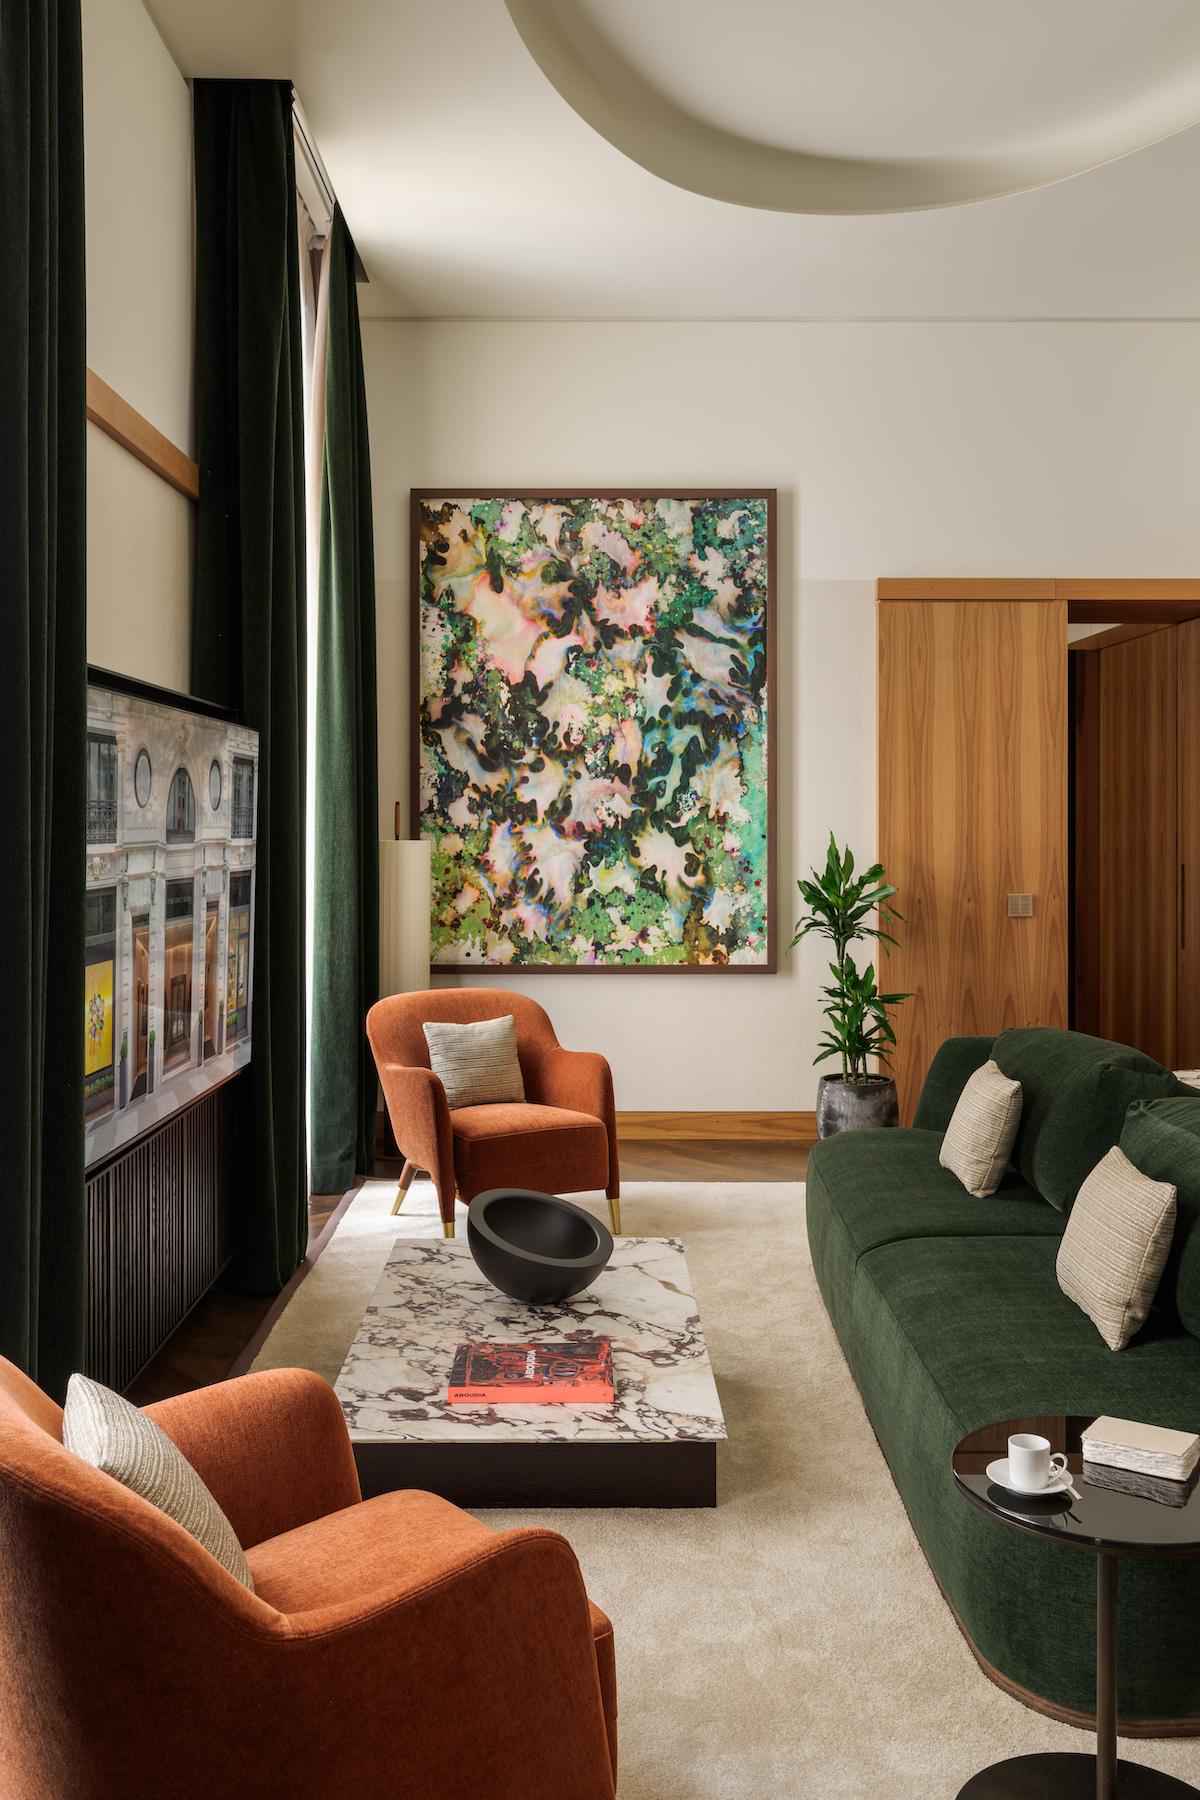 Park Hyatt Milano Opens New Suites Designed by Flaviano Capriotti Architetti